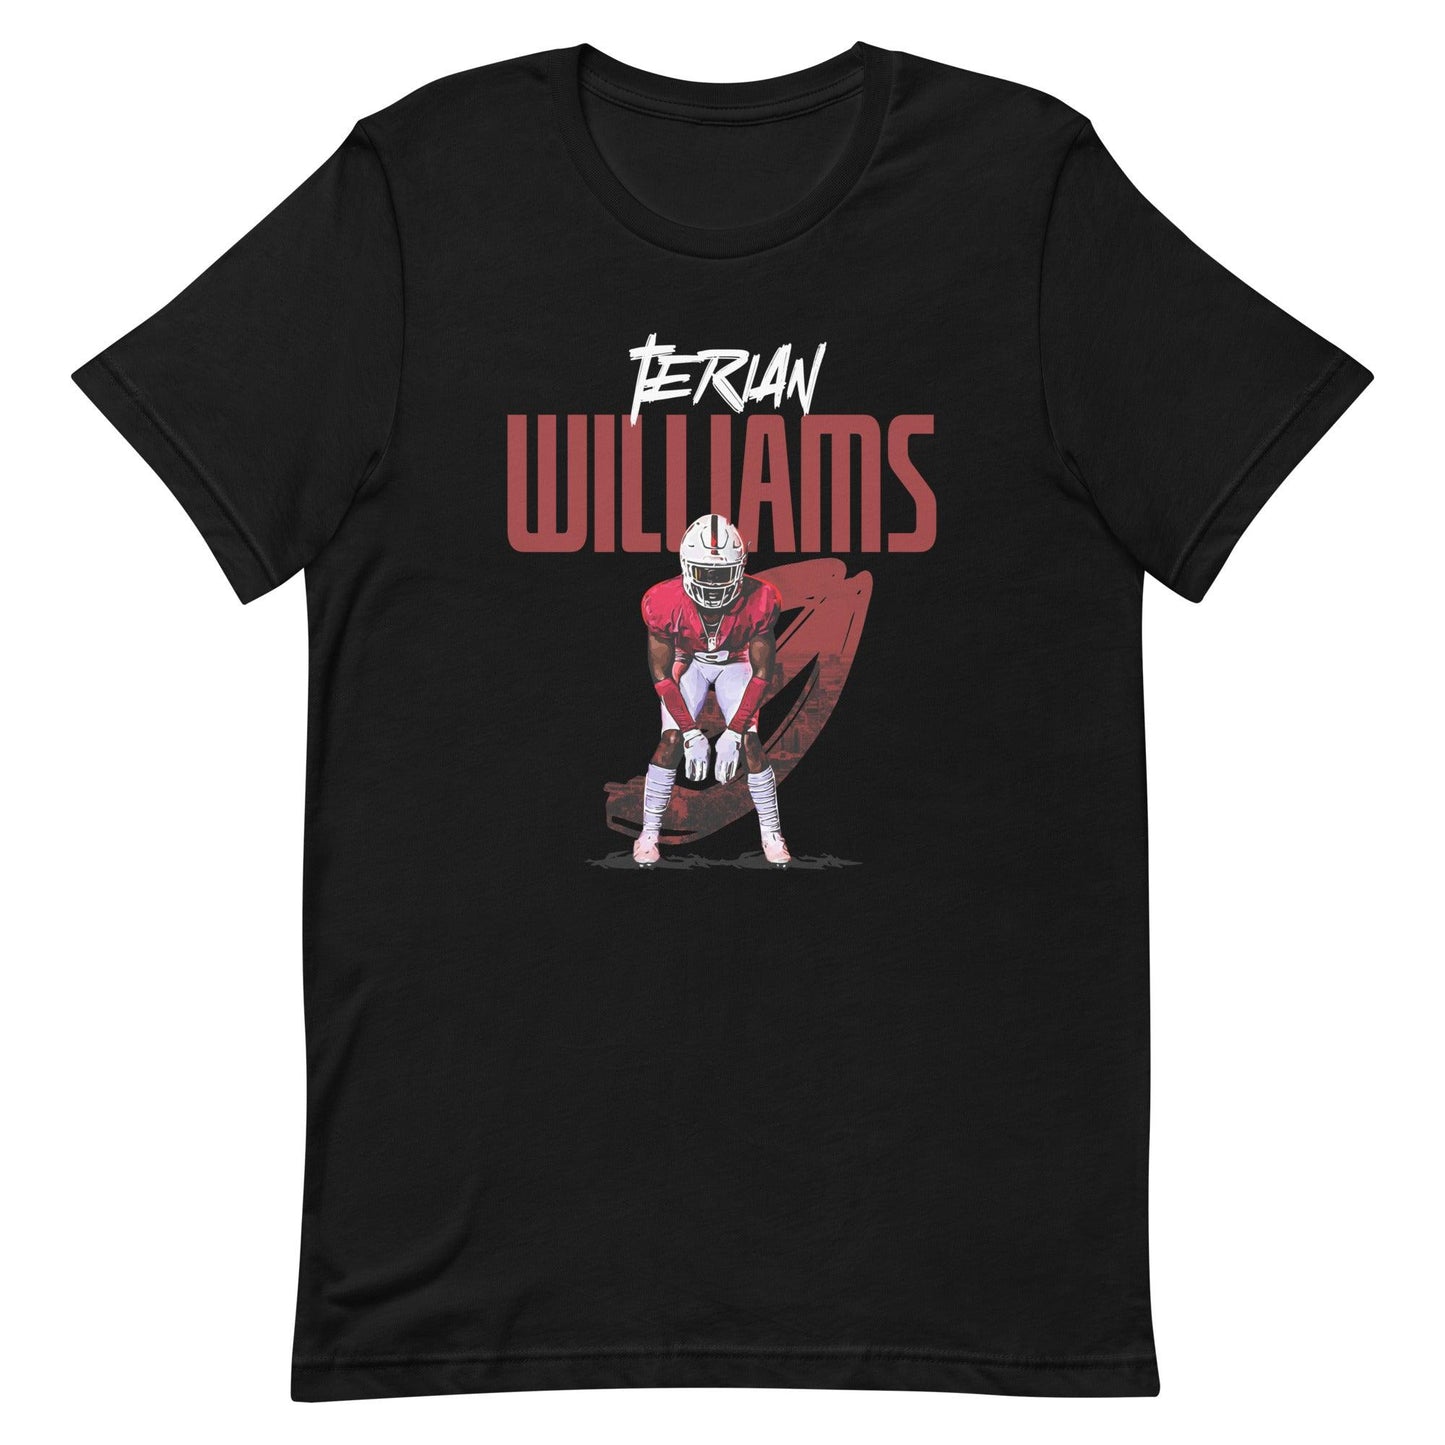 Terian Williams "Gameday" t-shirt - Fan Arch